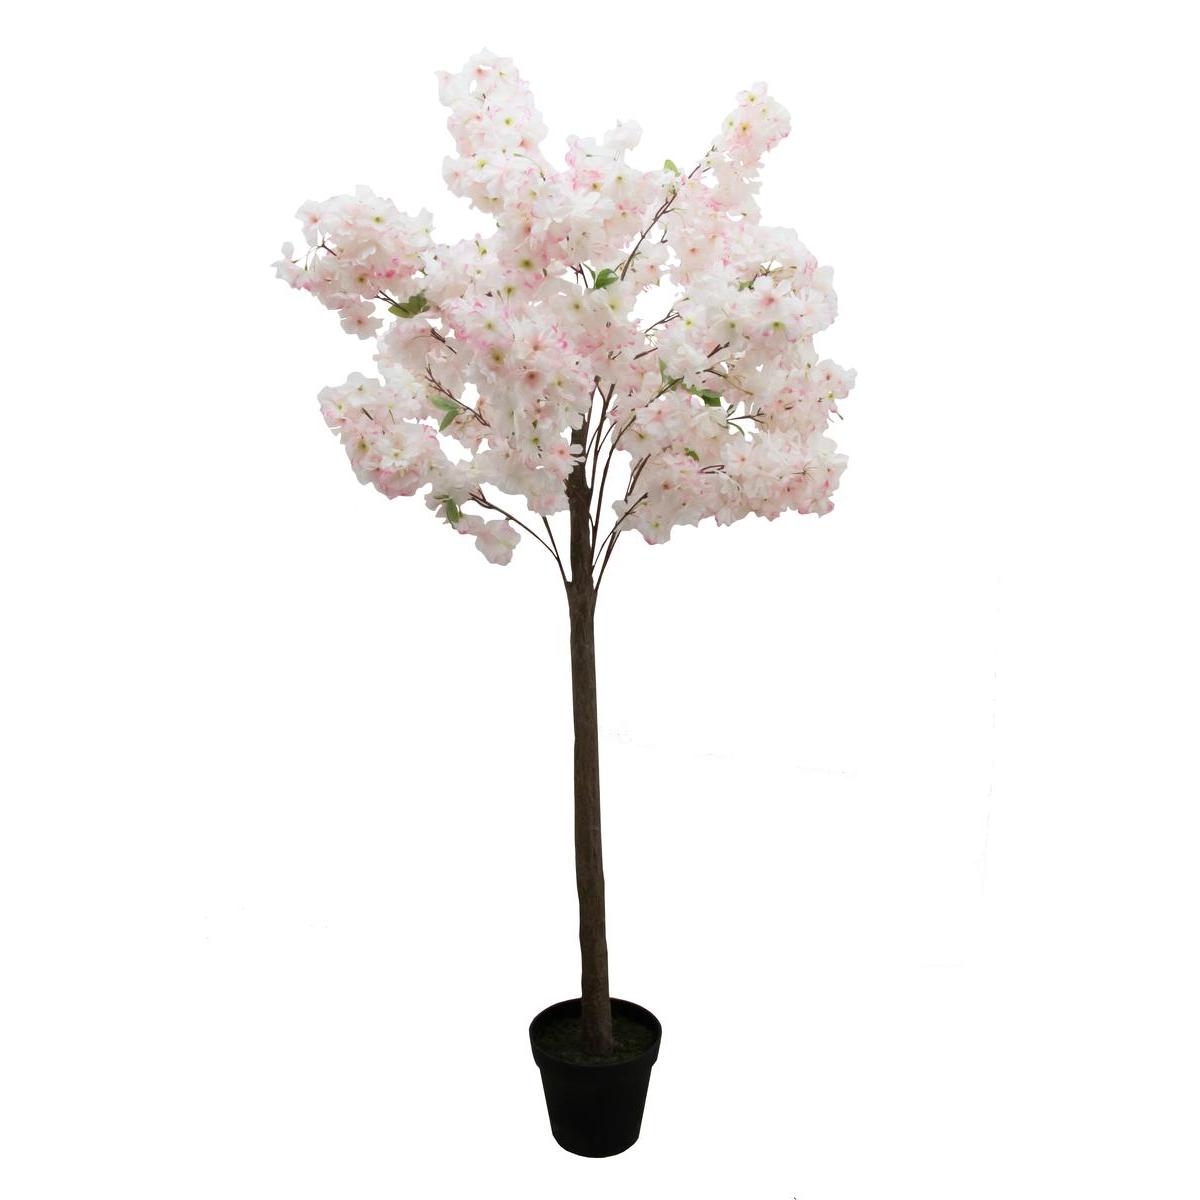 Pommier en fleurs 8 branches - H 180 cm - Rose